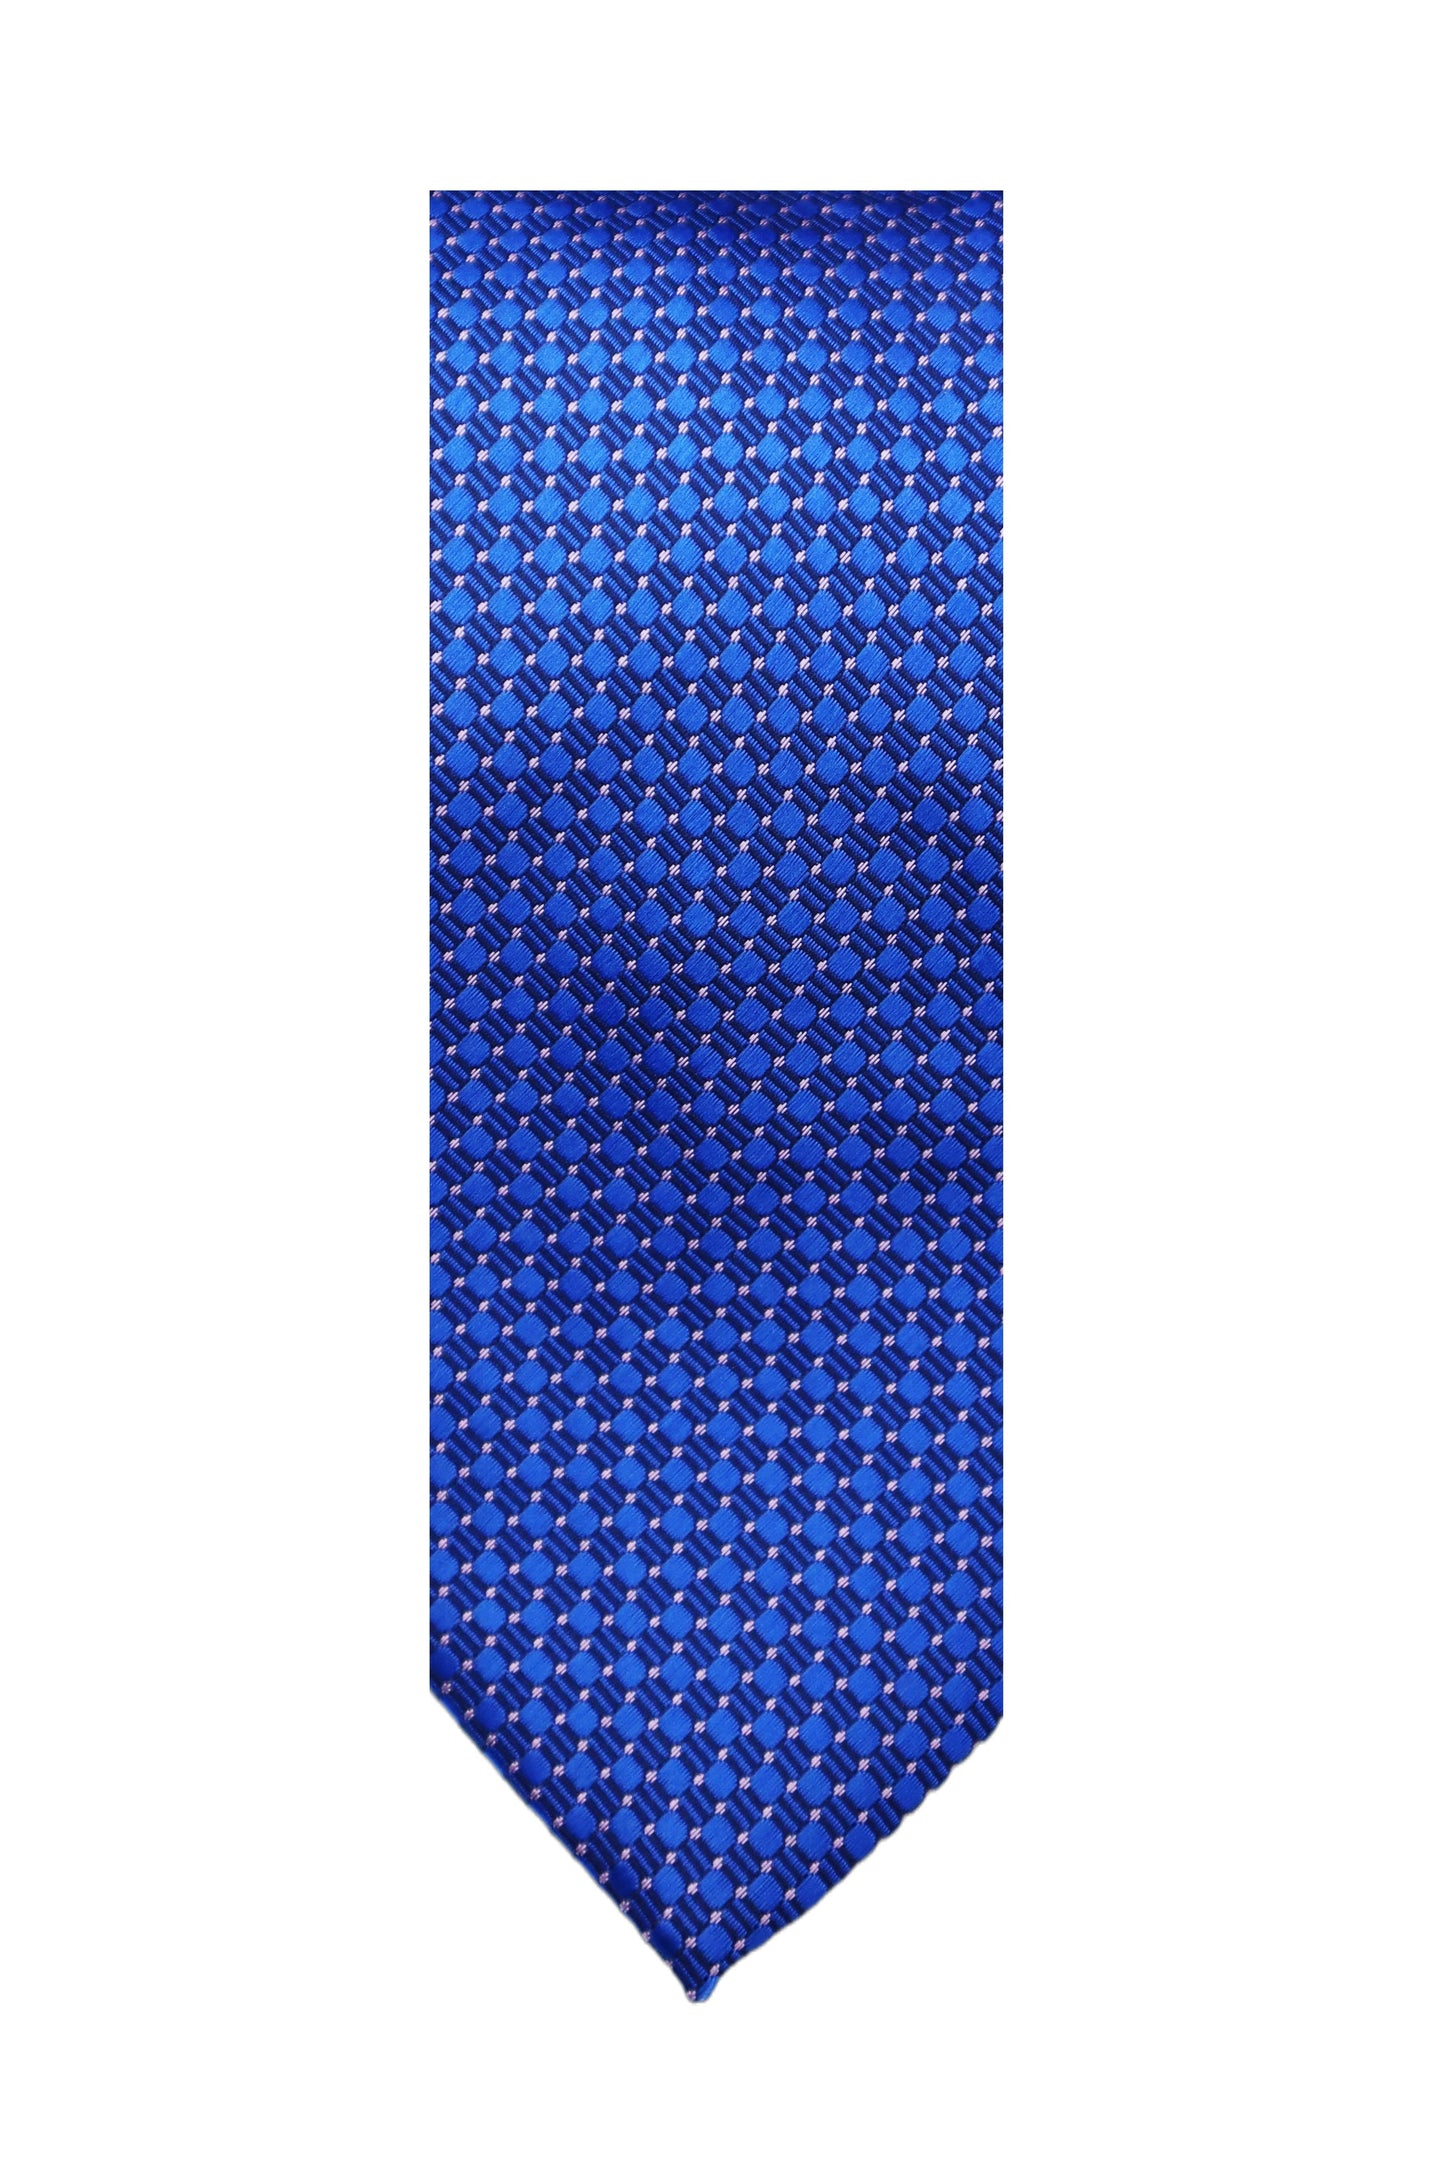 Blue Patterned Necktie